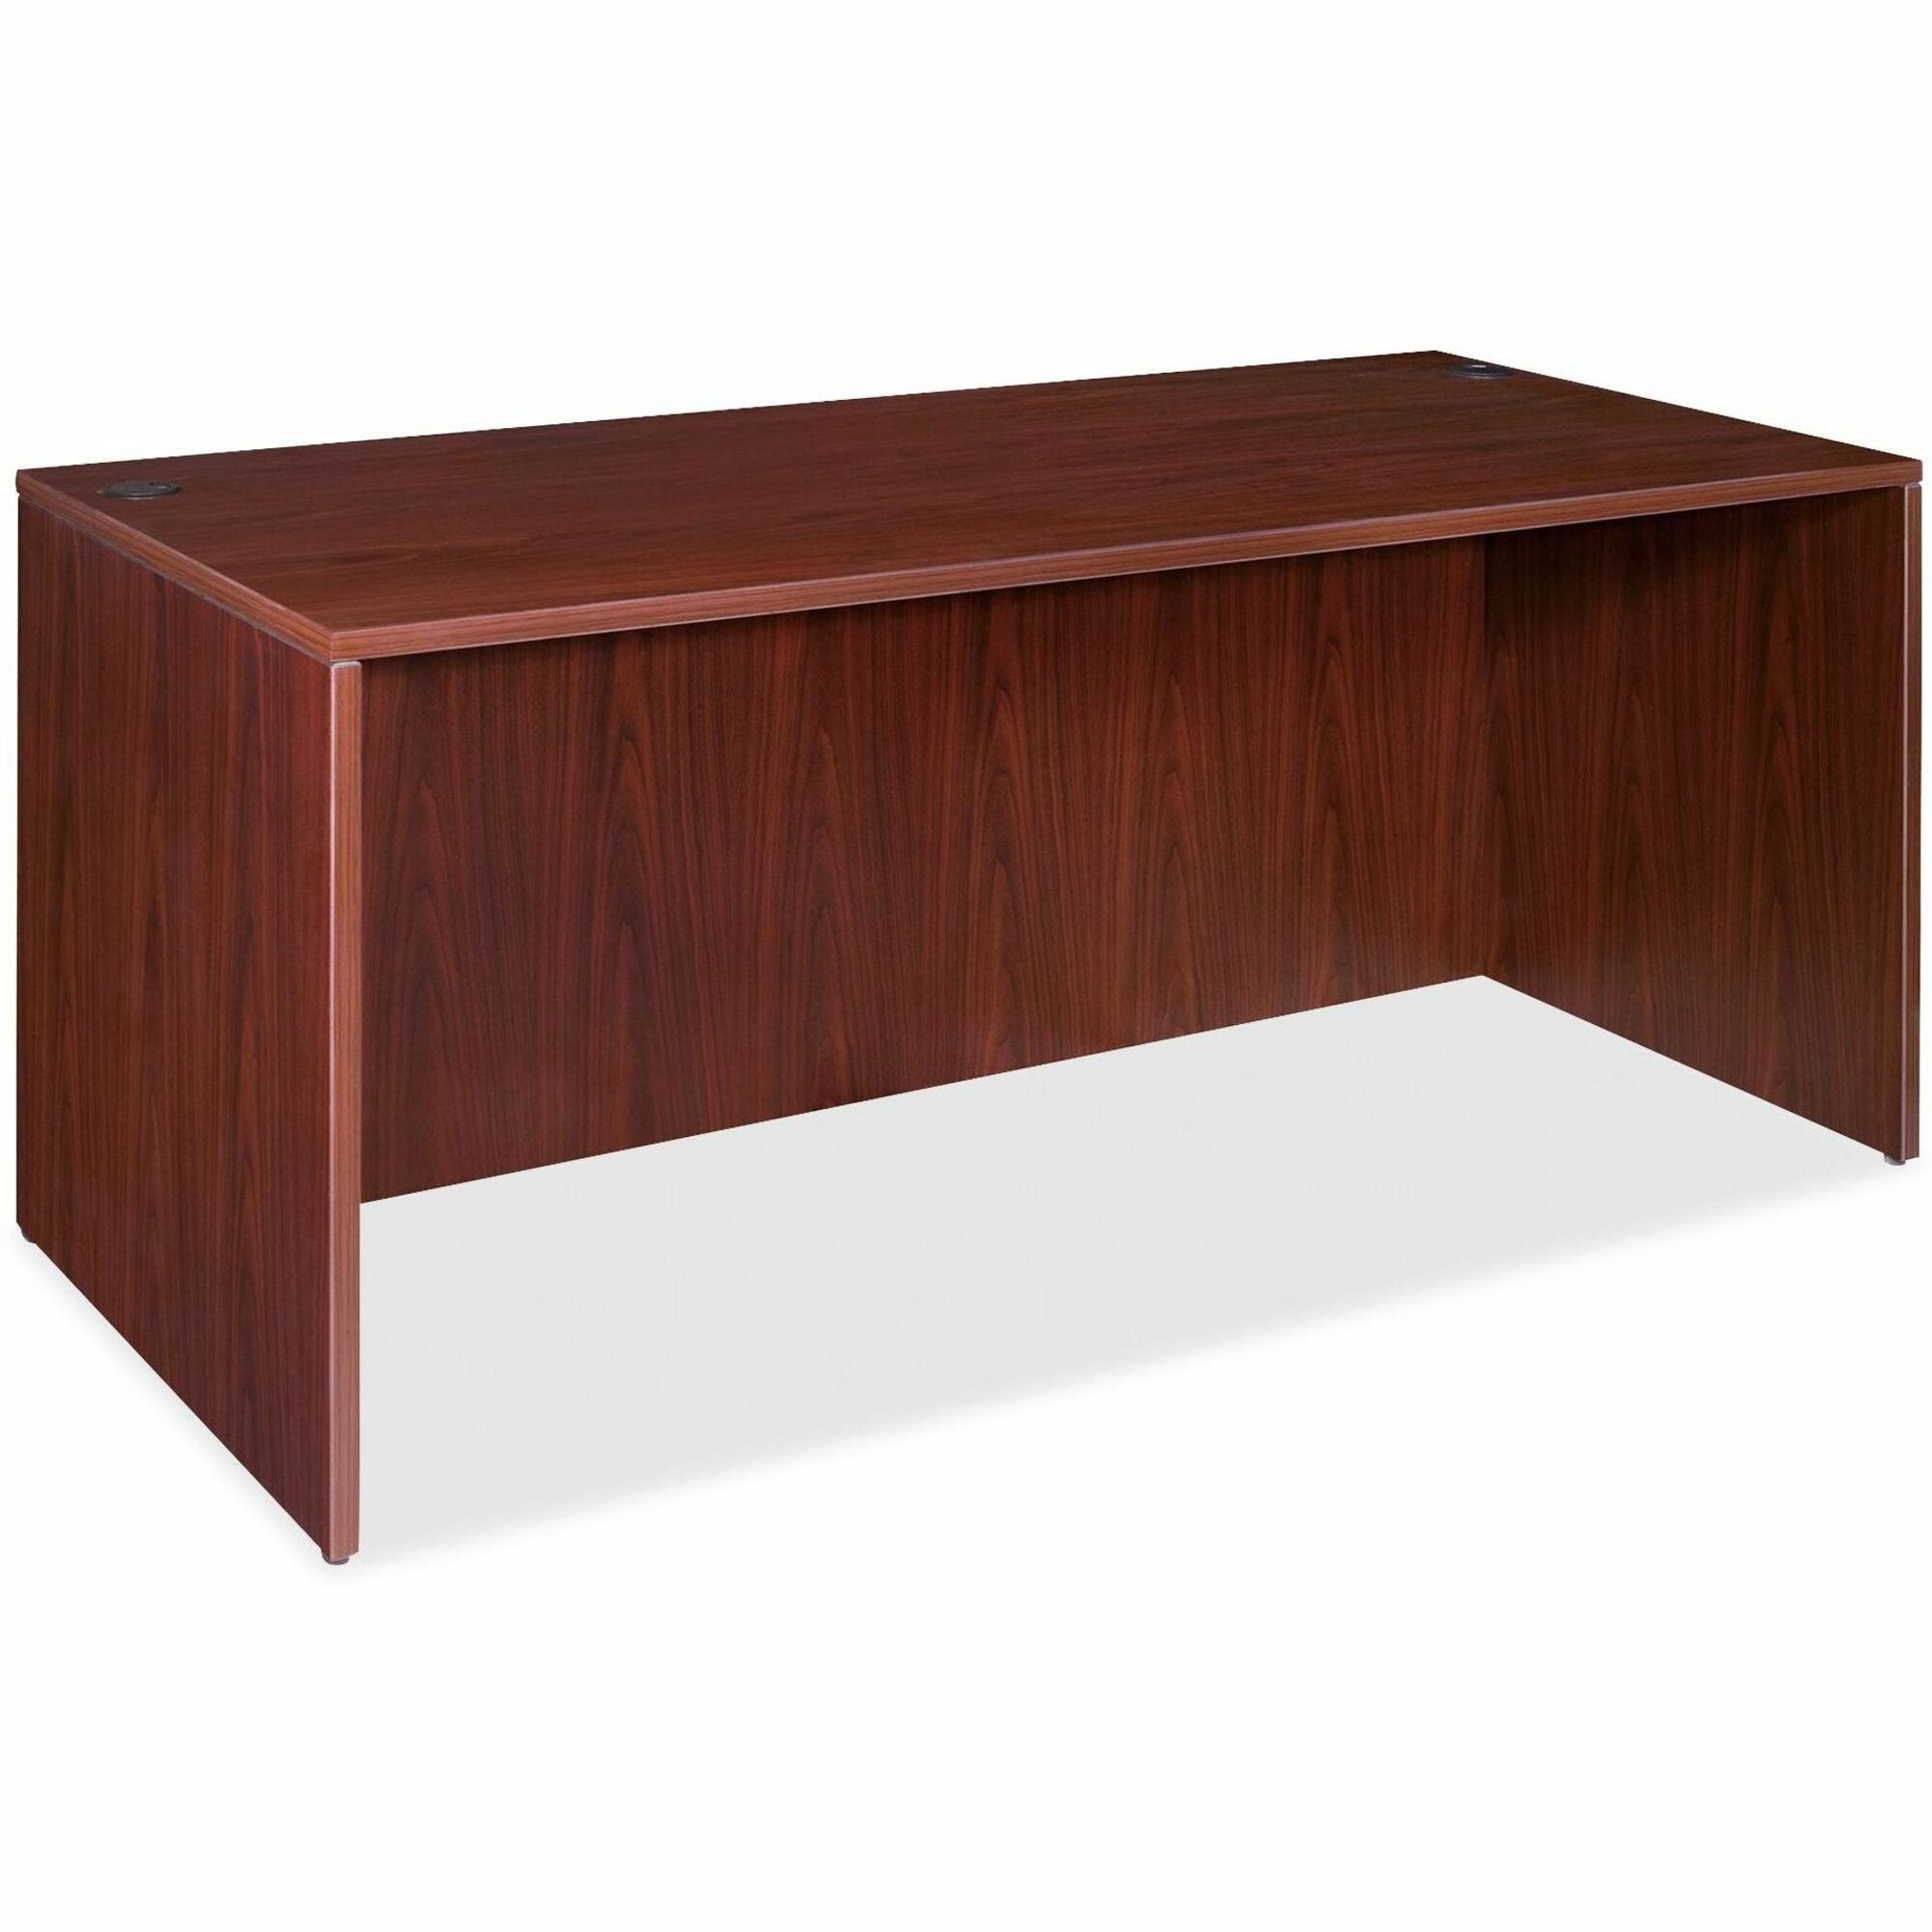 Lorell Essentials Series Rectangular Desk Shell - 59" x 29.5" x 1" x 29.5" - Finish: Laminate, Mahogany - Grommet, Modesty Panel, Durable, Adjustable Feet - 